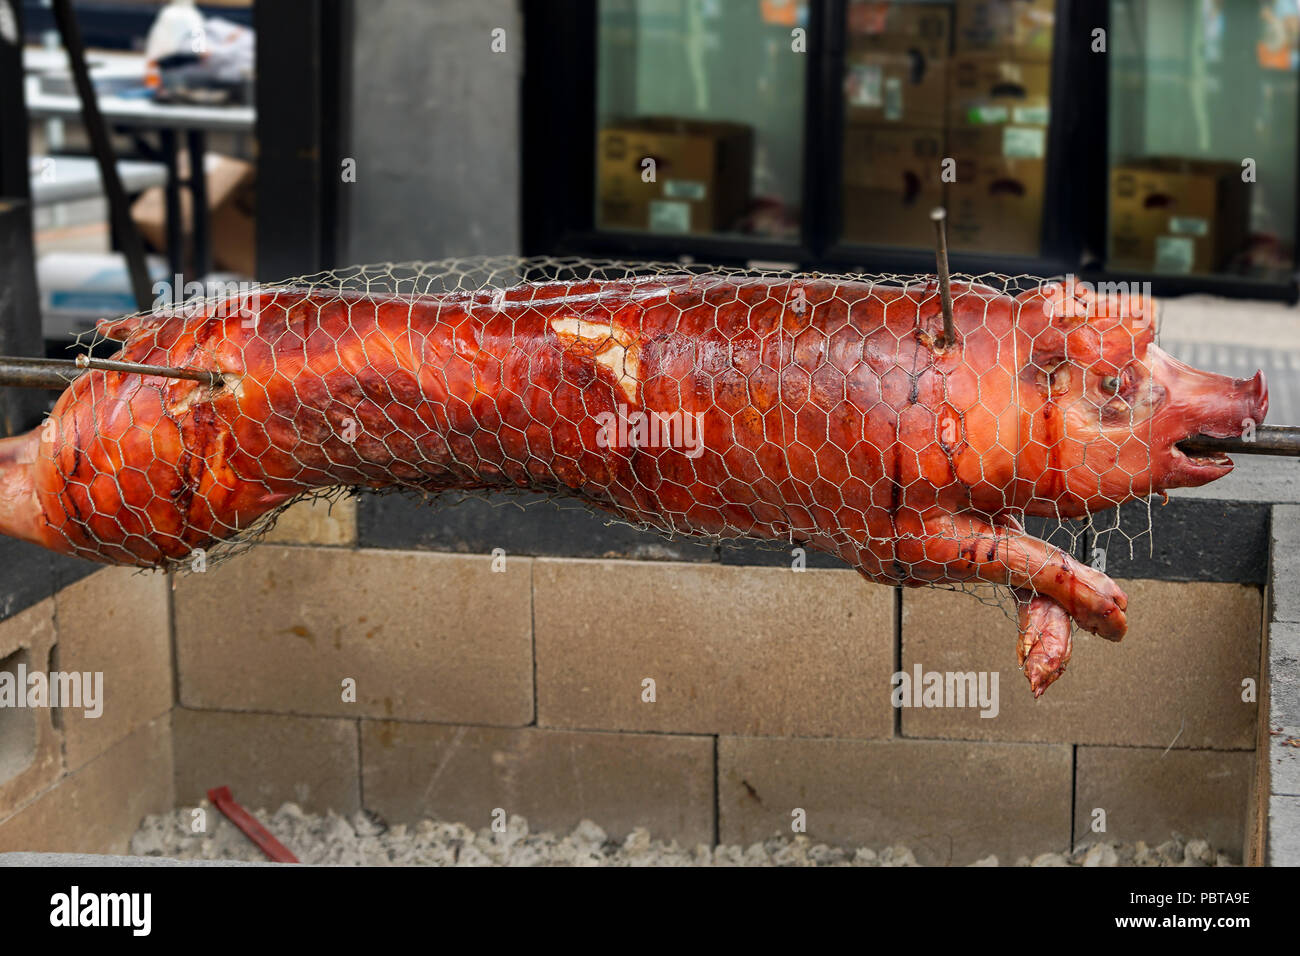 BBQ Hog on spit pig barbeque Stock Photo